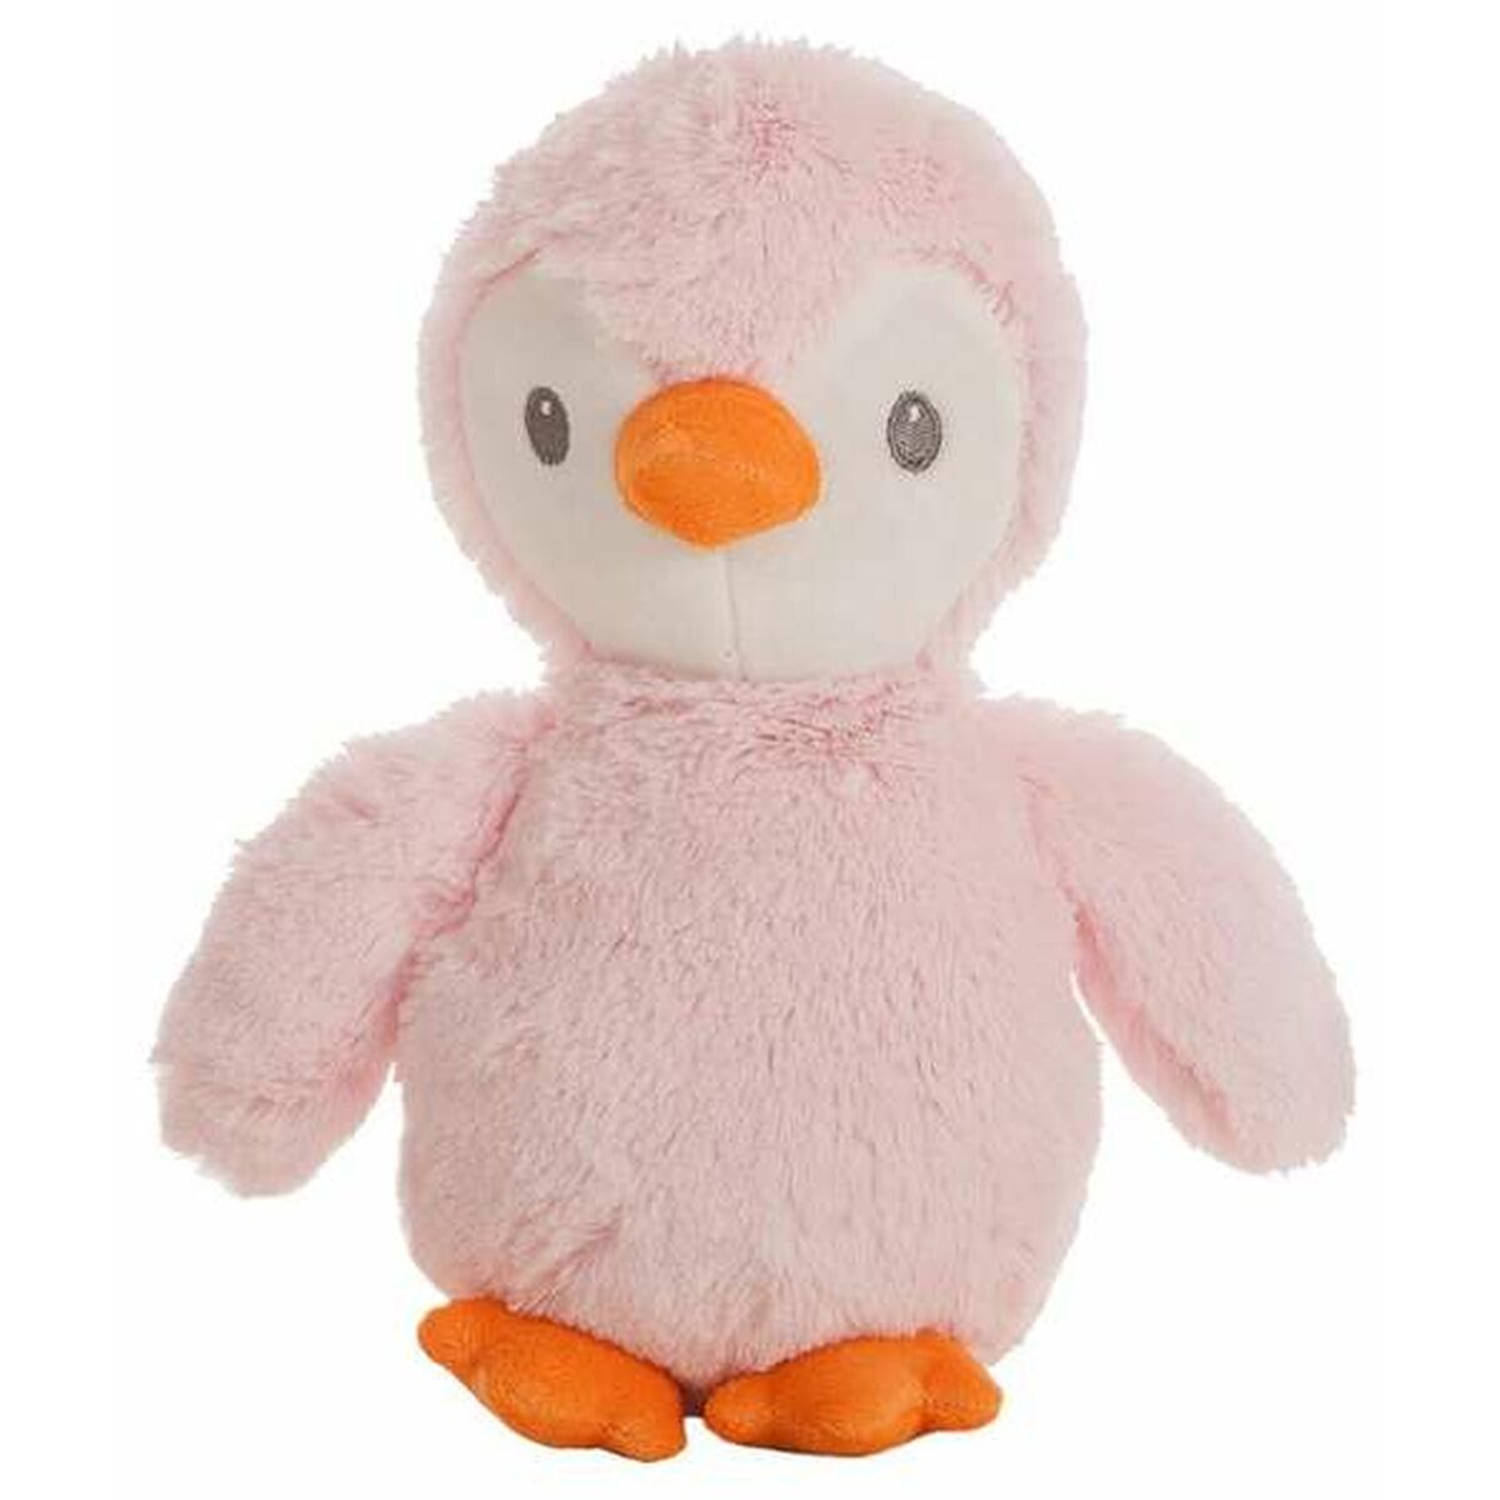 Knuffel Roze Pinguïn 22 cm